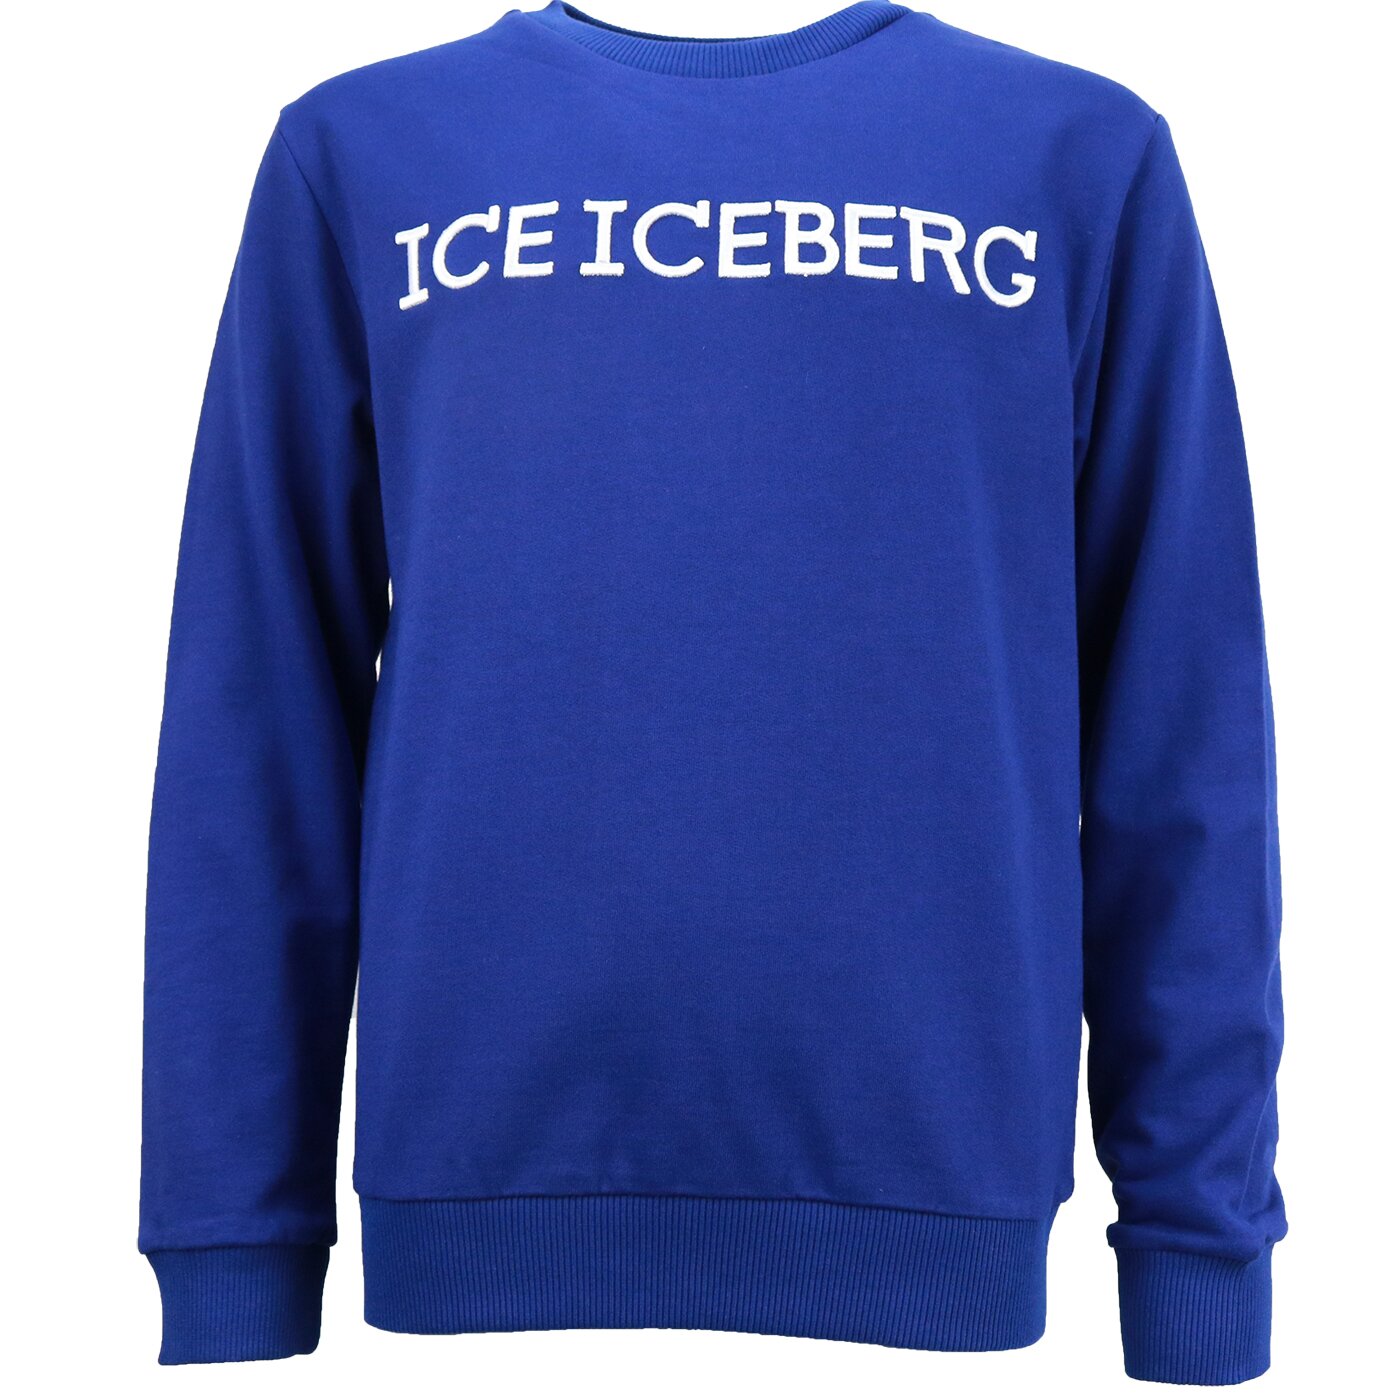 iceberg sweater